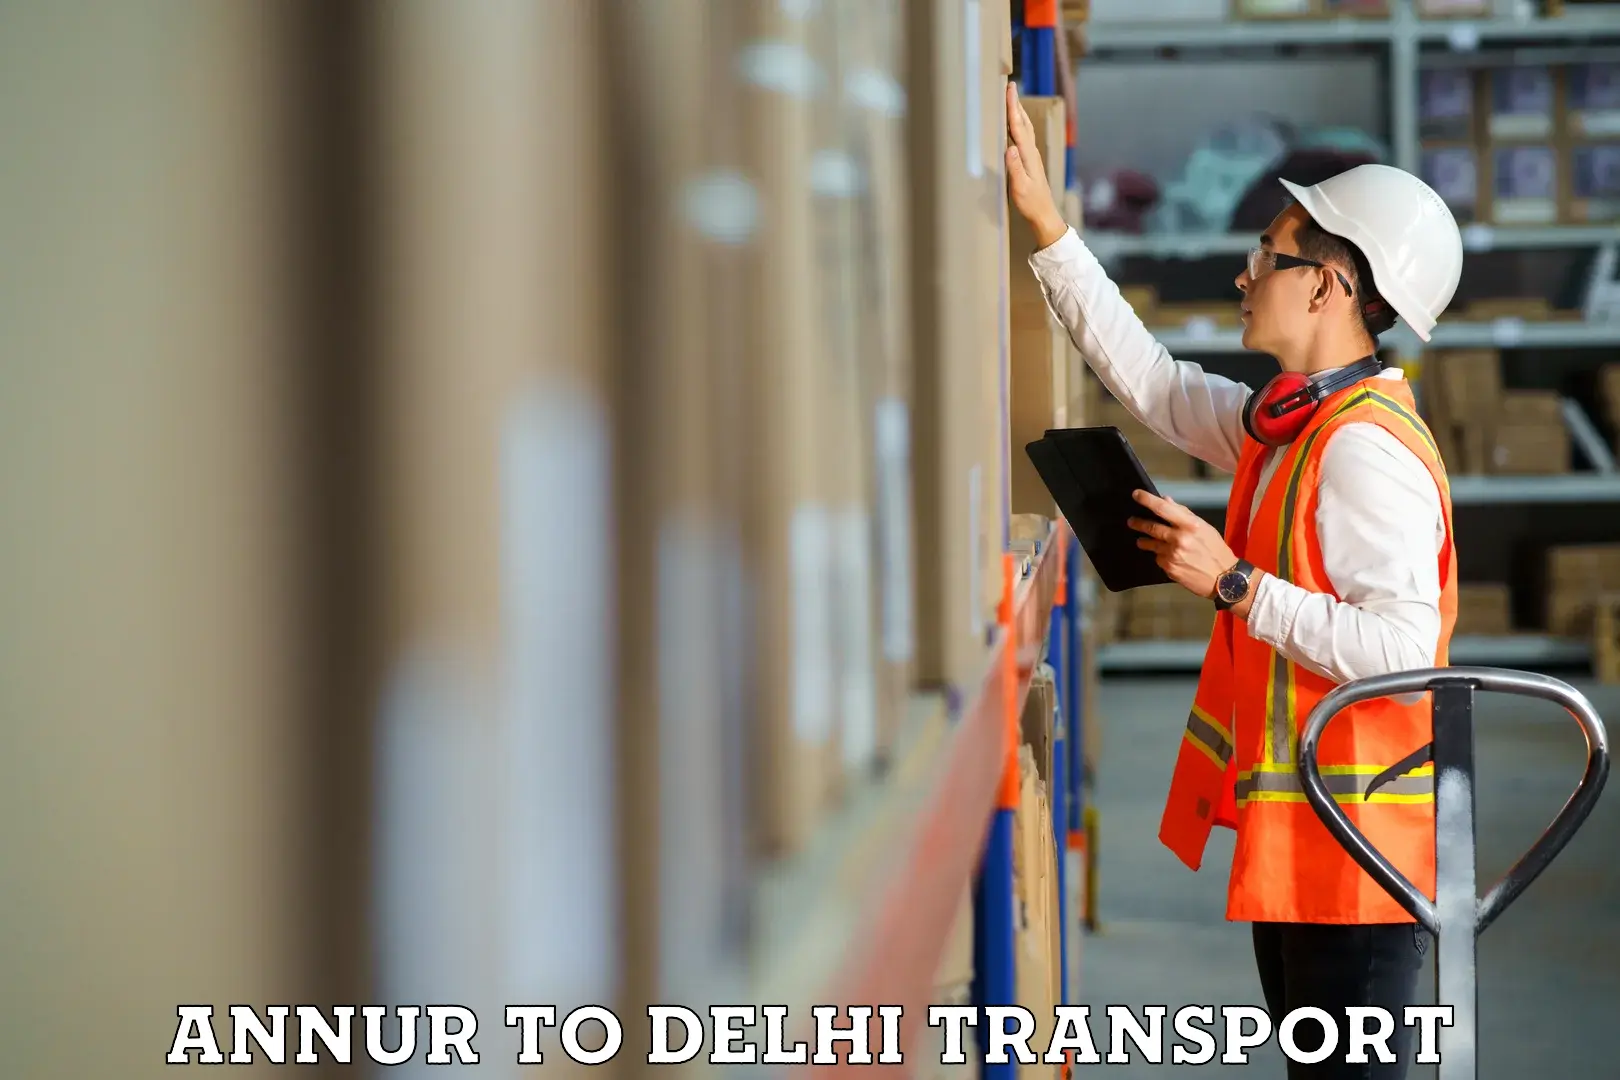 Daily transport service Annur to Delhi